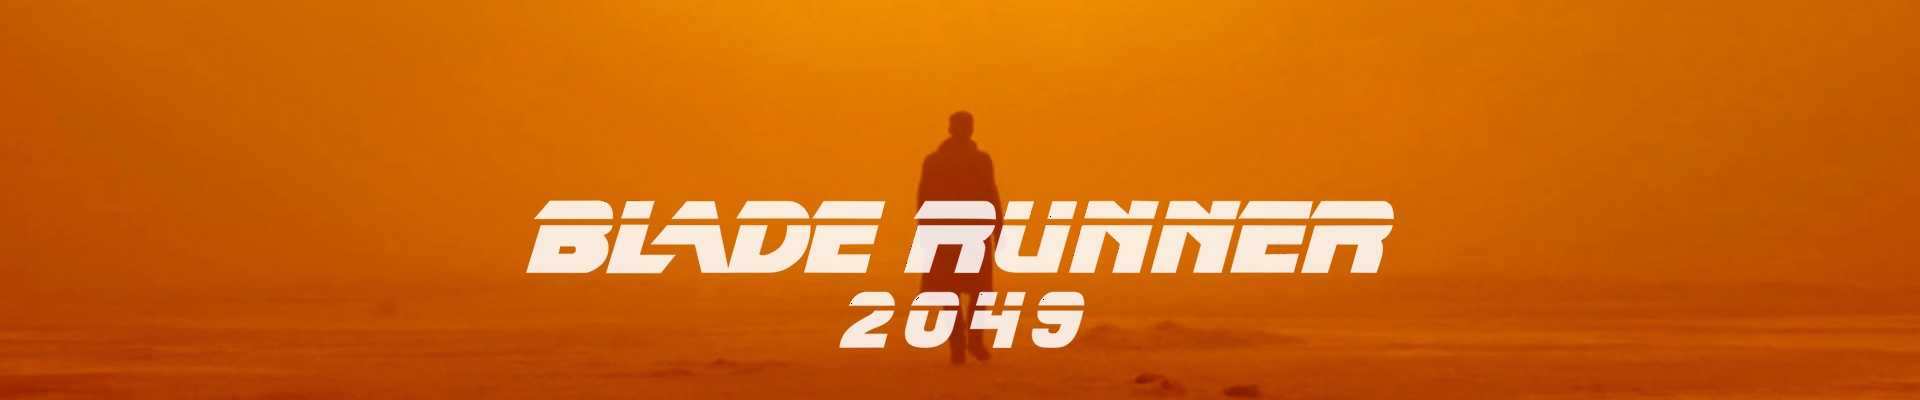 So, I’ve watched Blade Runner 2049